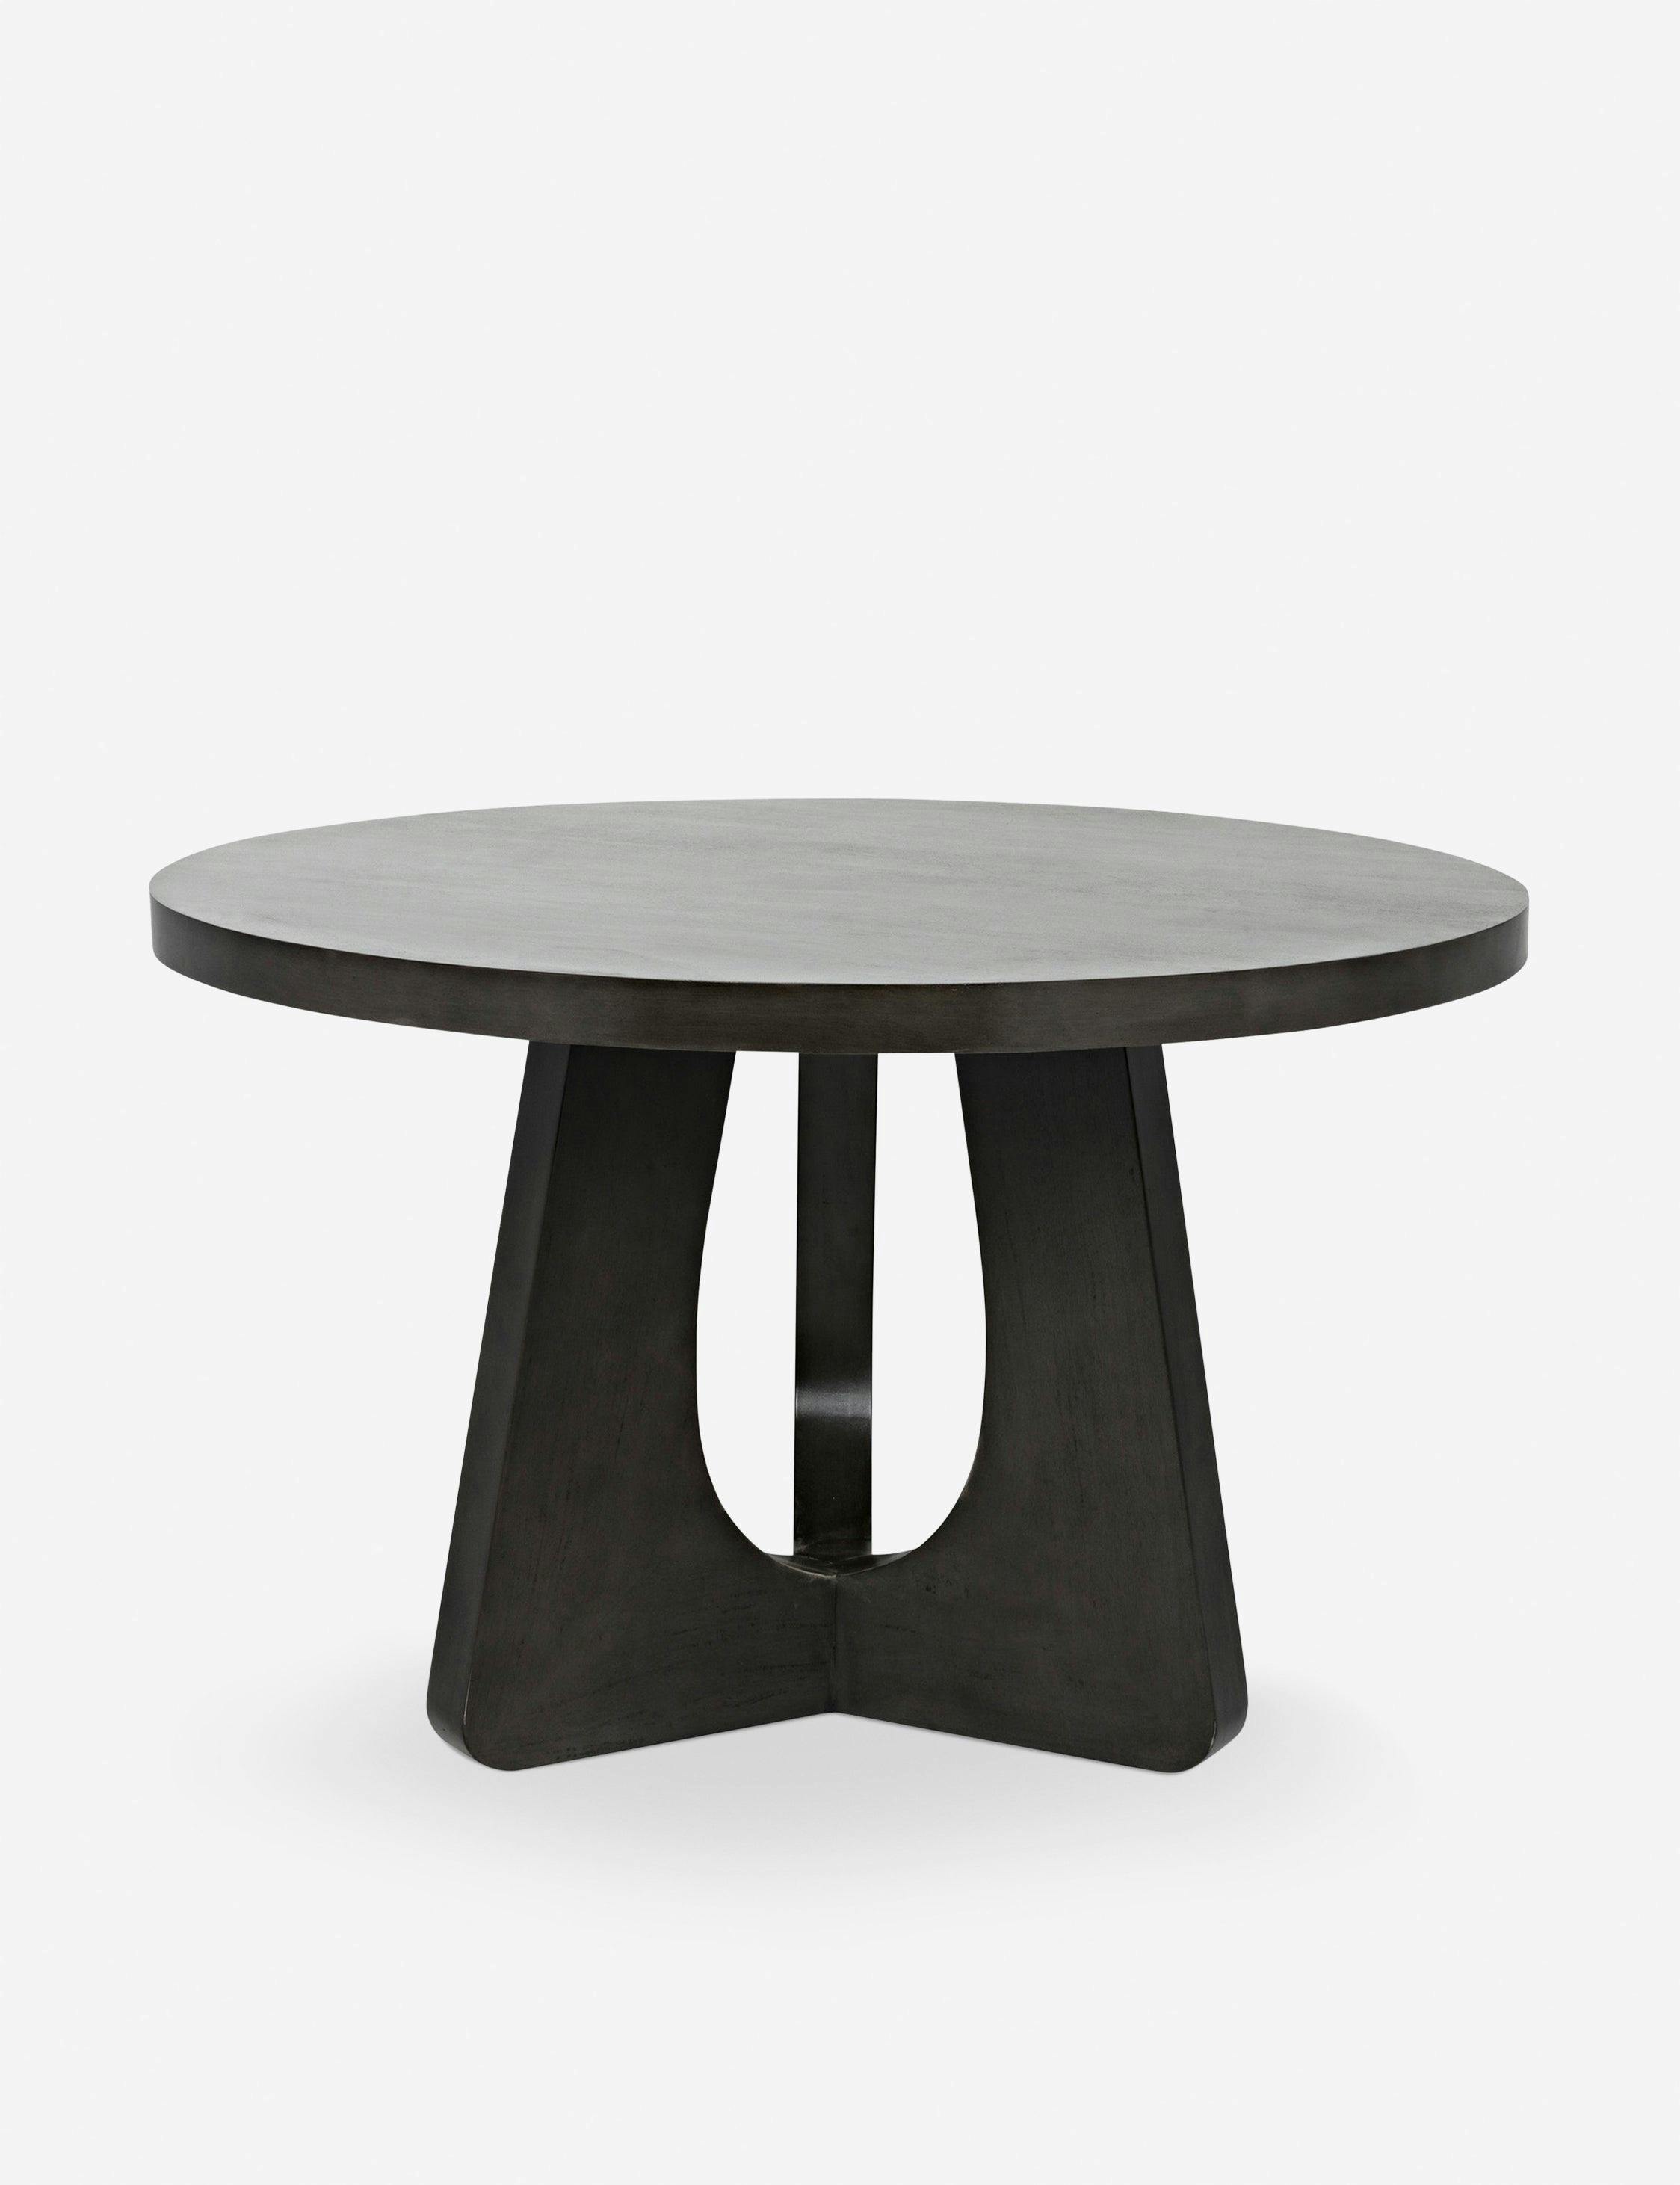 Kumeo 48" Round Light Gray-Dark Brown Mid-Century Modern Dining Table